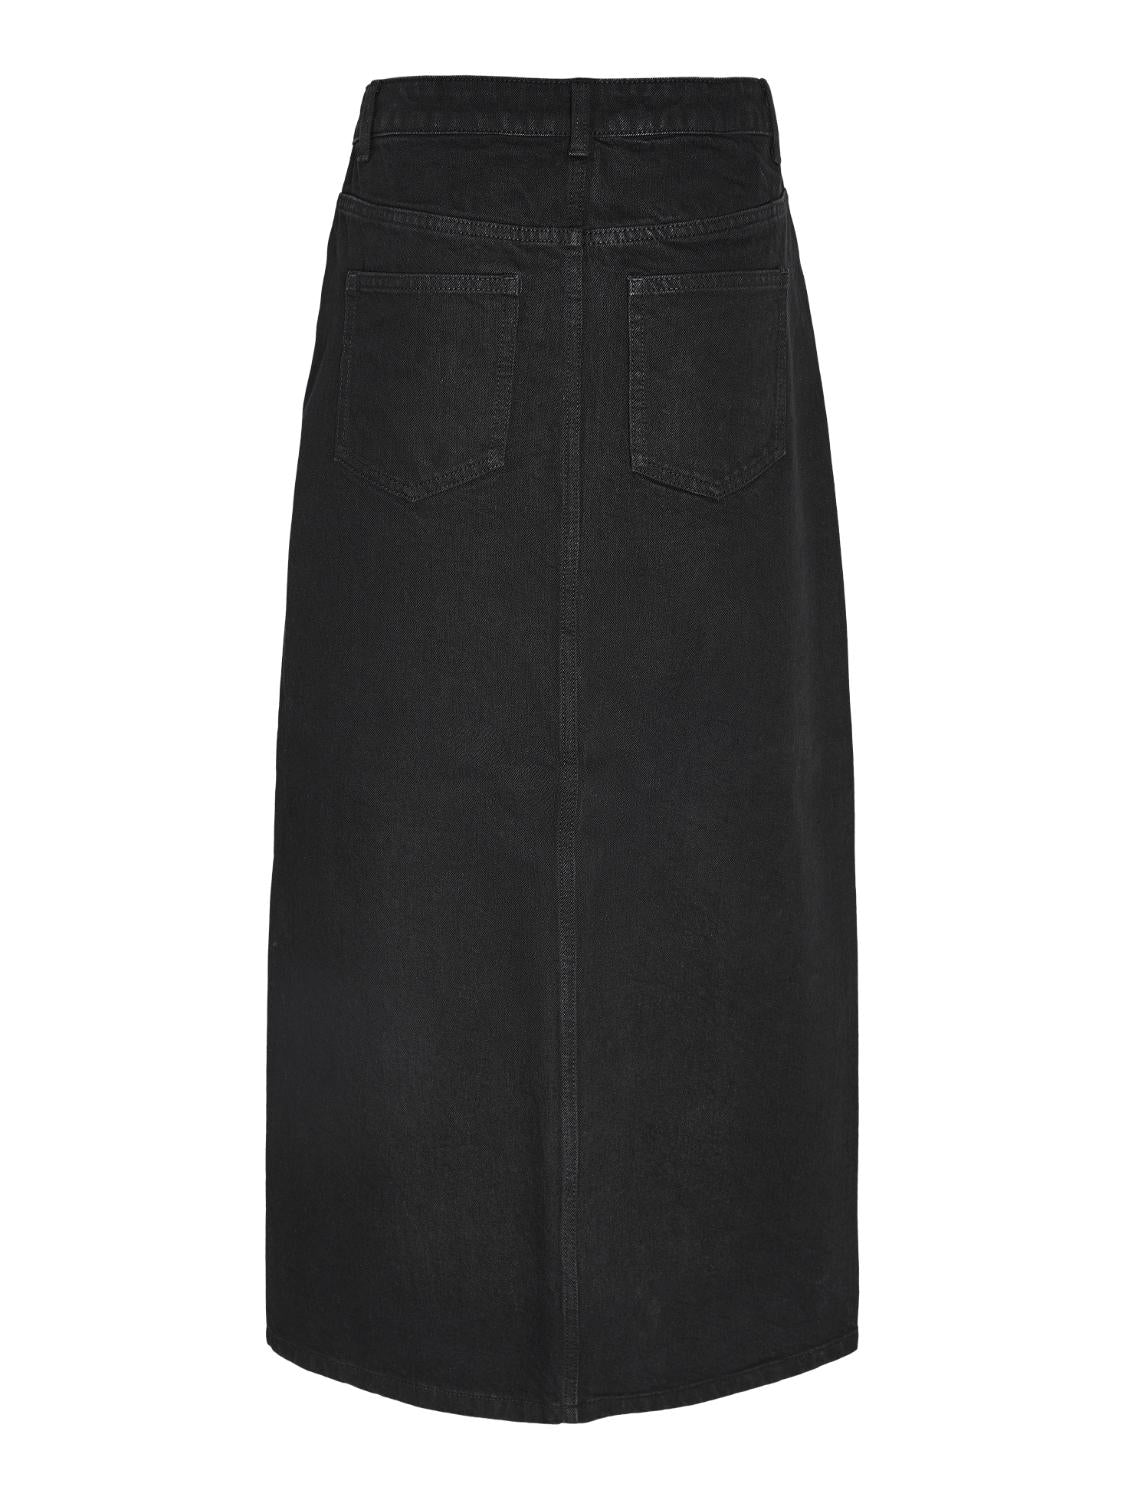 15 Fit AF Ways To Wear A Denim Skirt - Society19 UK #jeanskirtoutfits |  Fashion inspo, Trendy outfits, Fashion